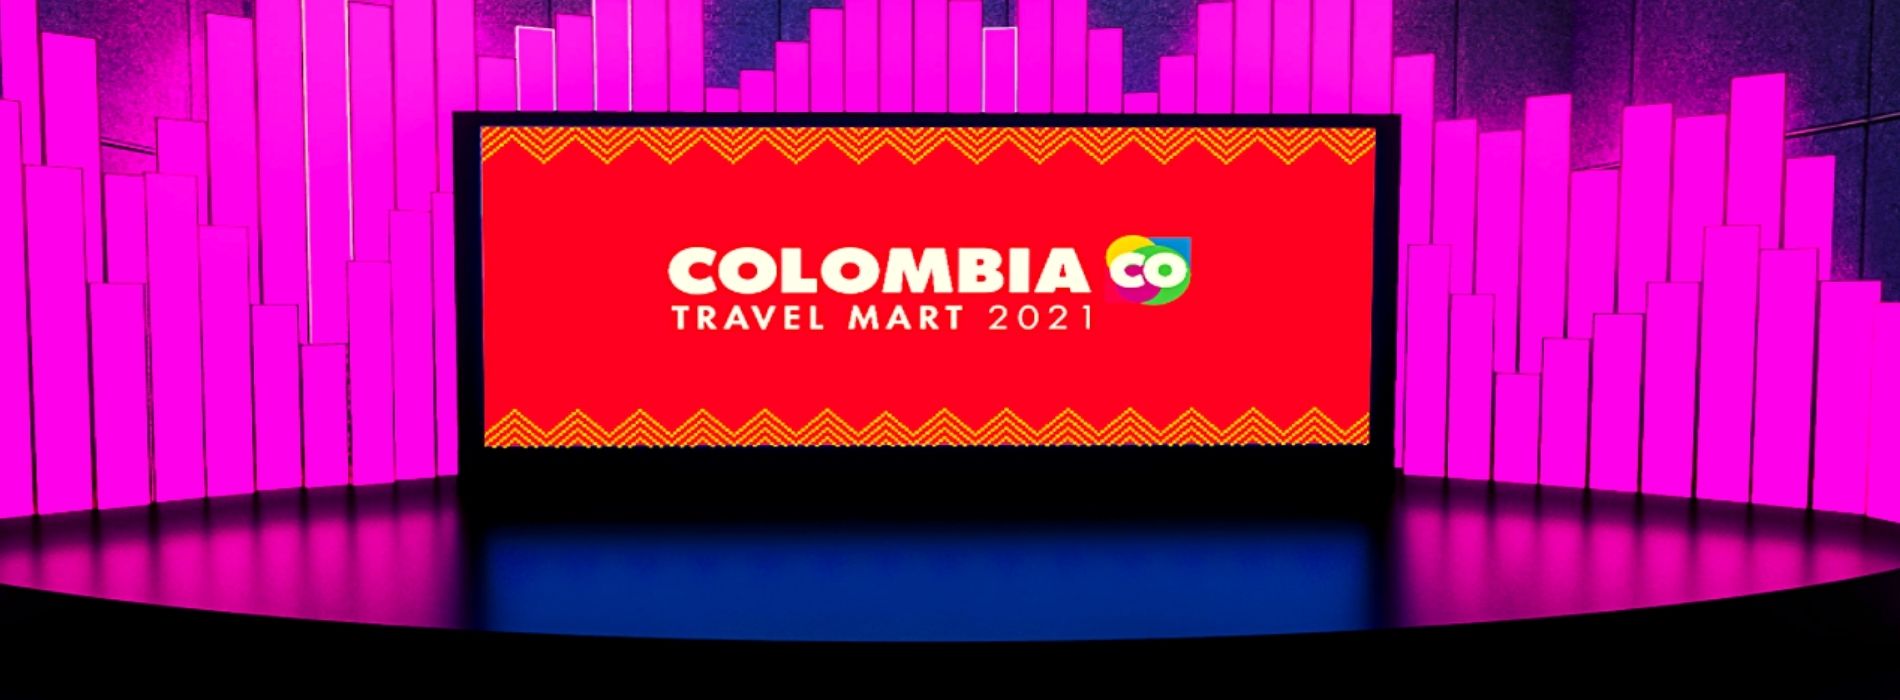 Escenario con pantalla de evento de Colombia CO  travel mart 2021